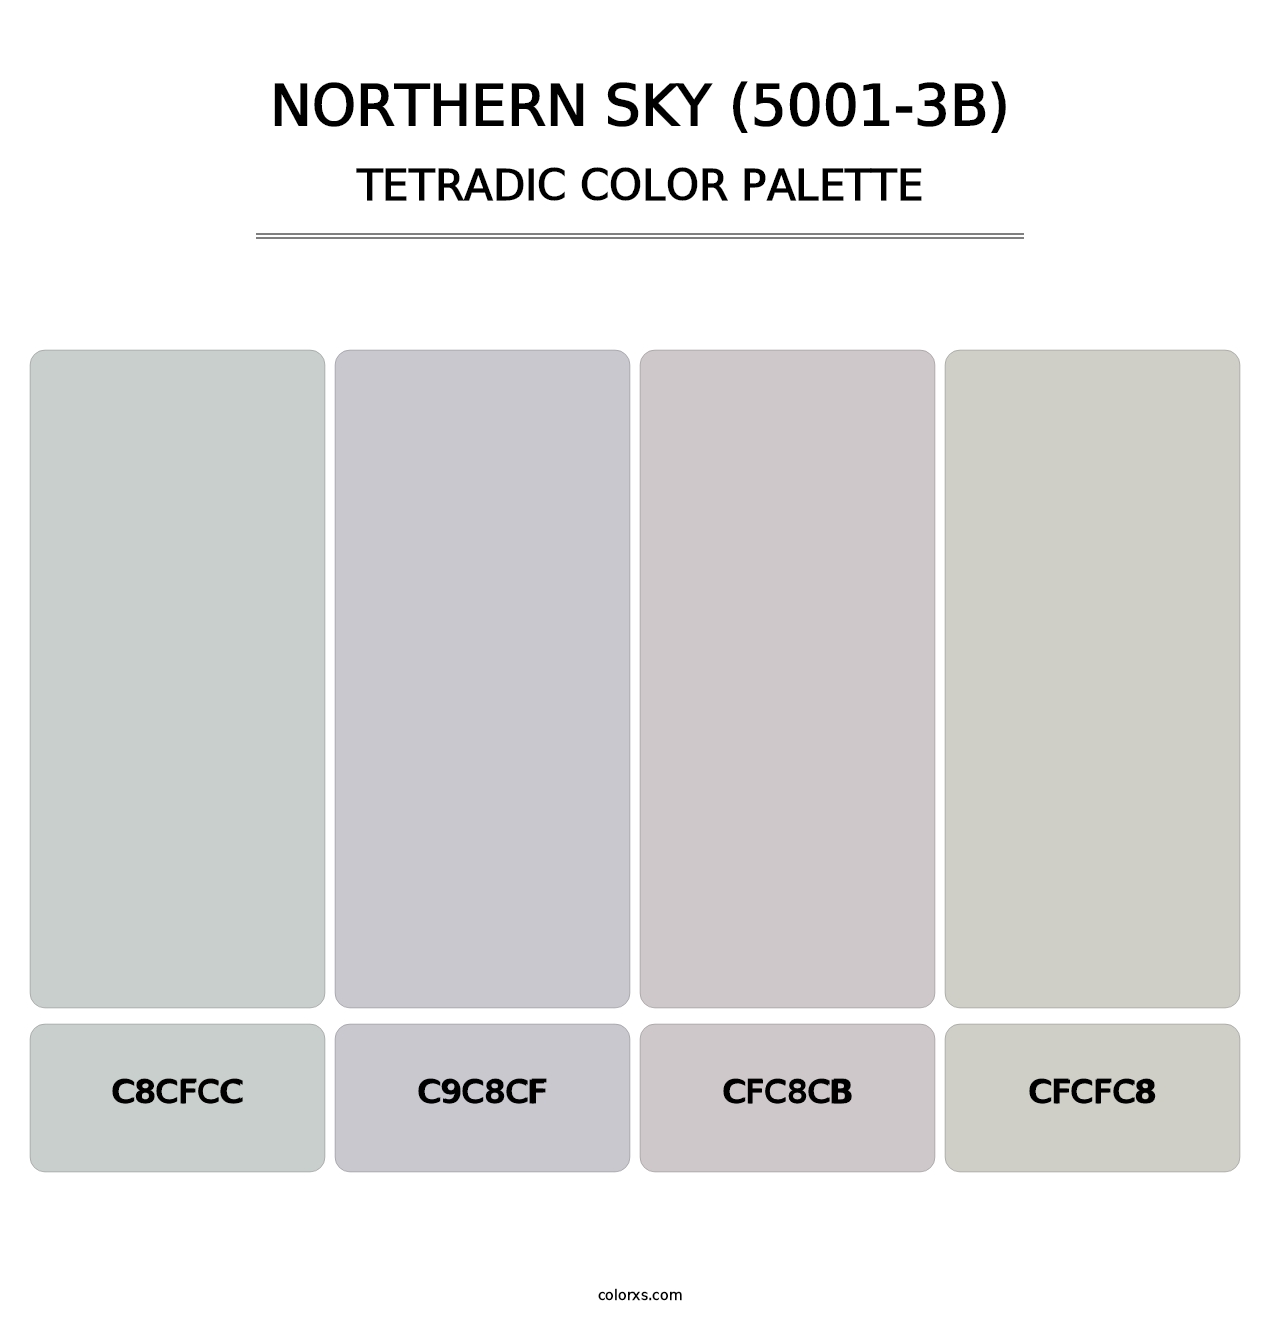 Northern Sky (5001-3B) - Tetradic Color Palette